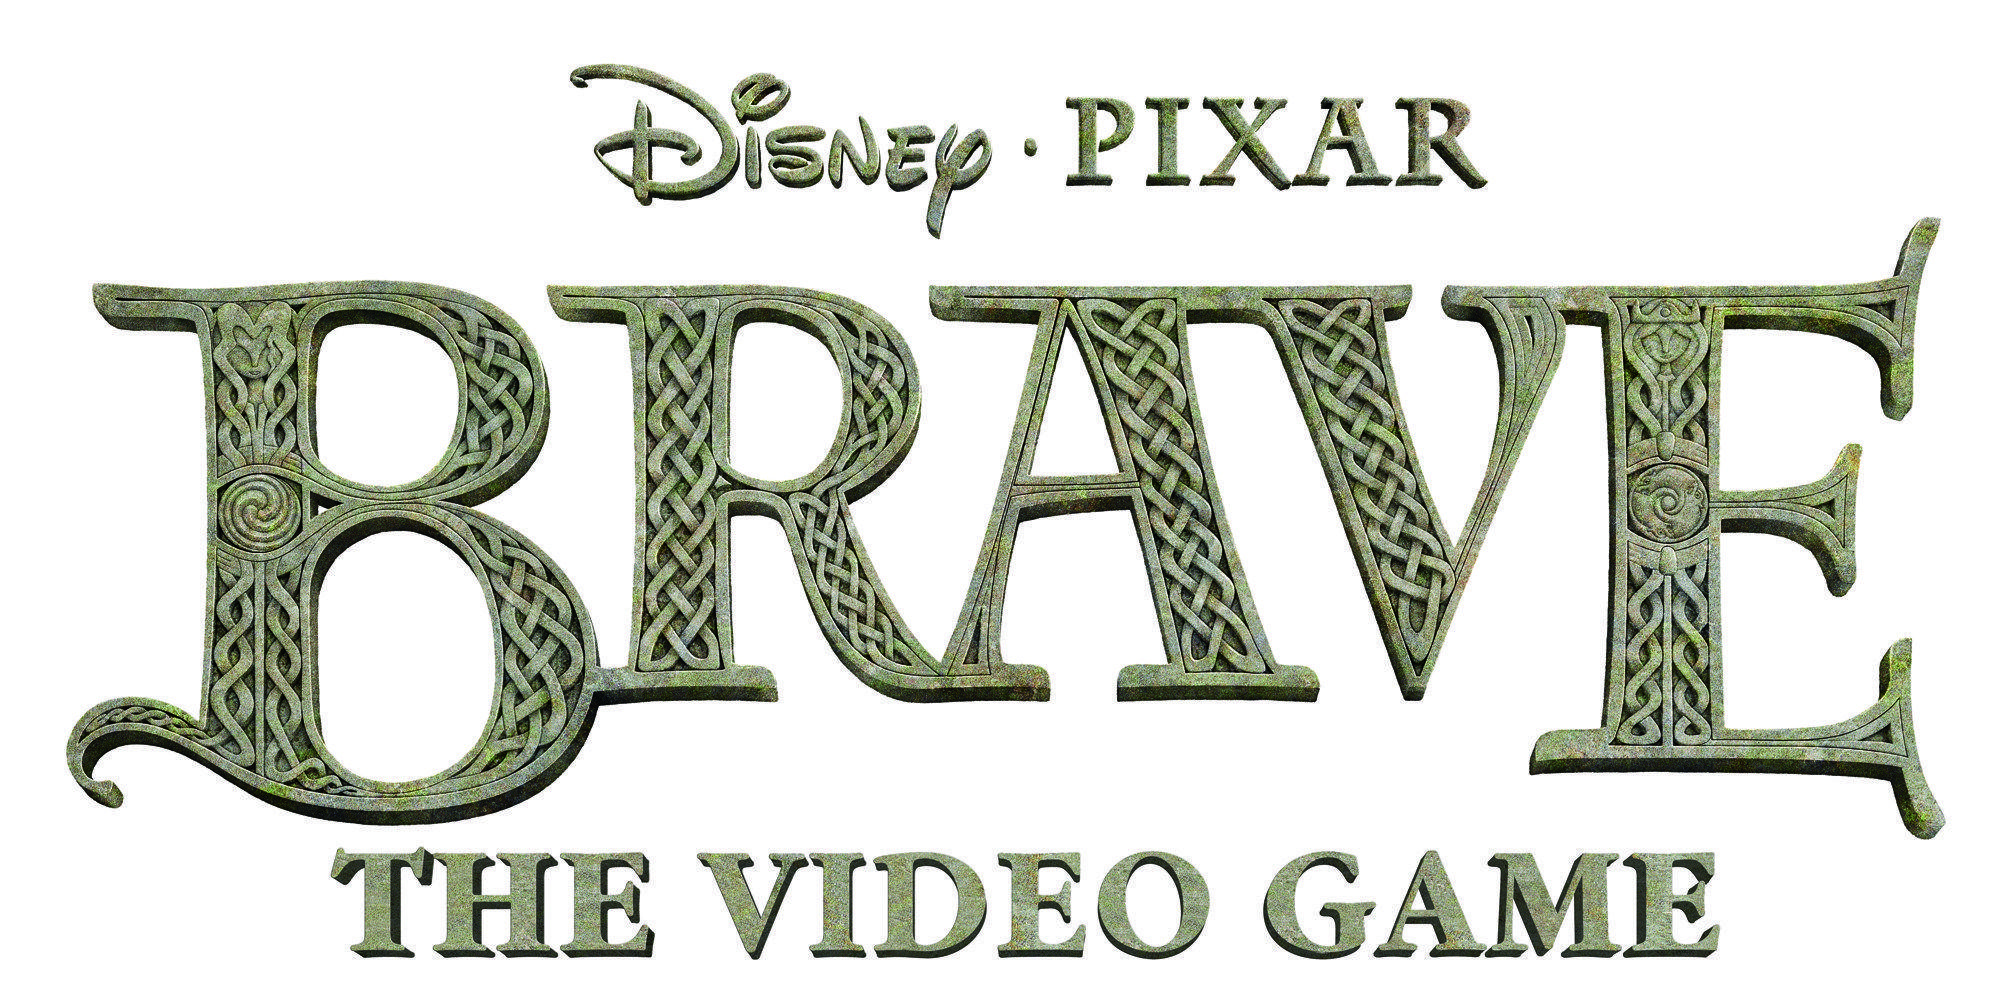 Disney Pixar Brave Logo - Challenge Destiny and Change Fate with Disney Pixar Brave: The Video